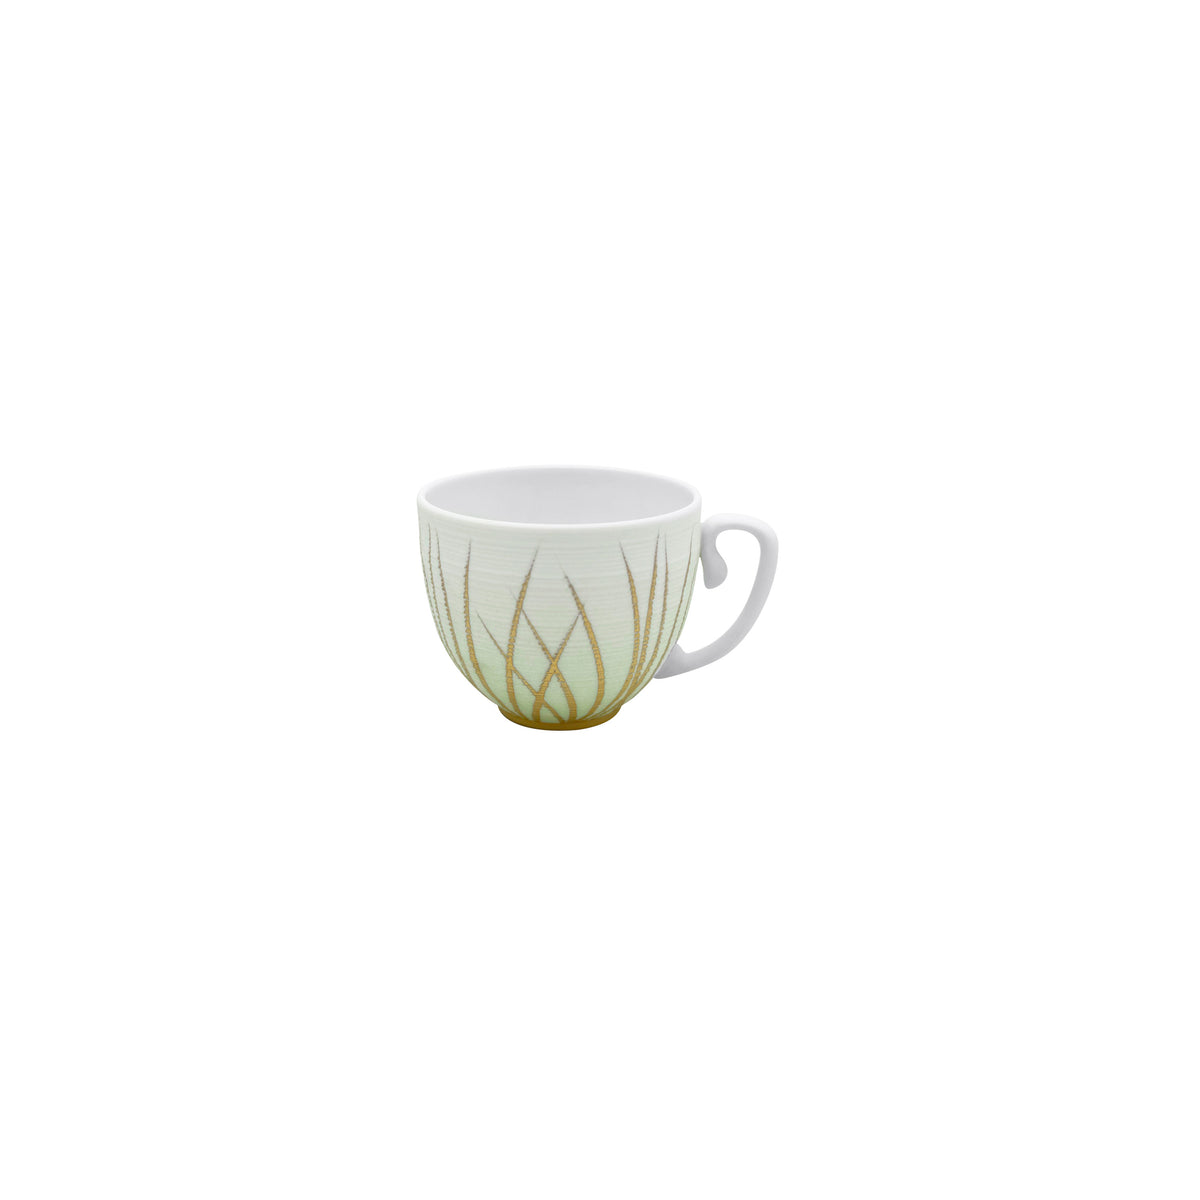 HEMISPHERE Tundra Spring - Coffee set (cup & saucer)